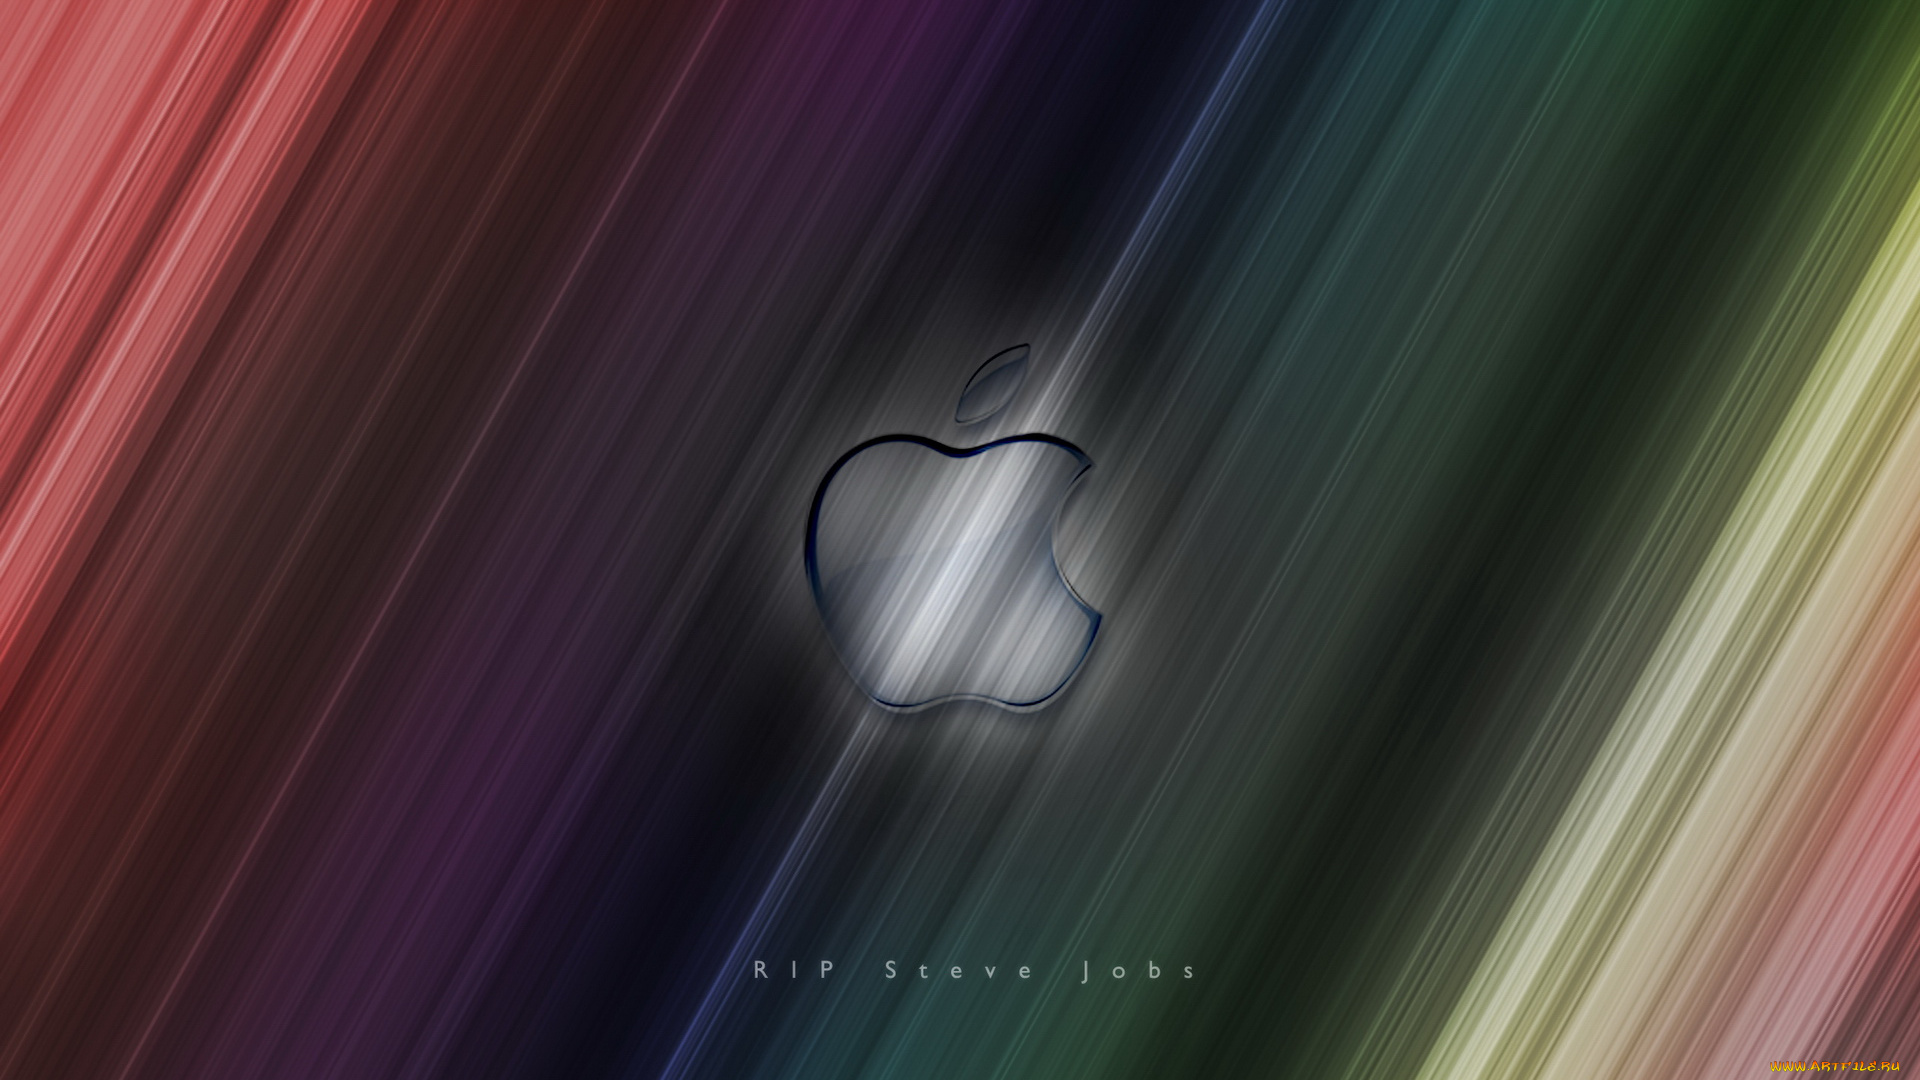 компьютеры, apple, яблоко, логотип, линии